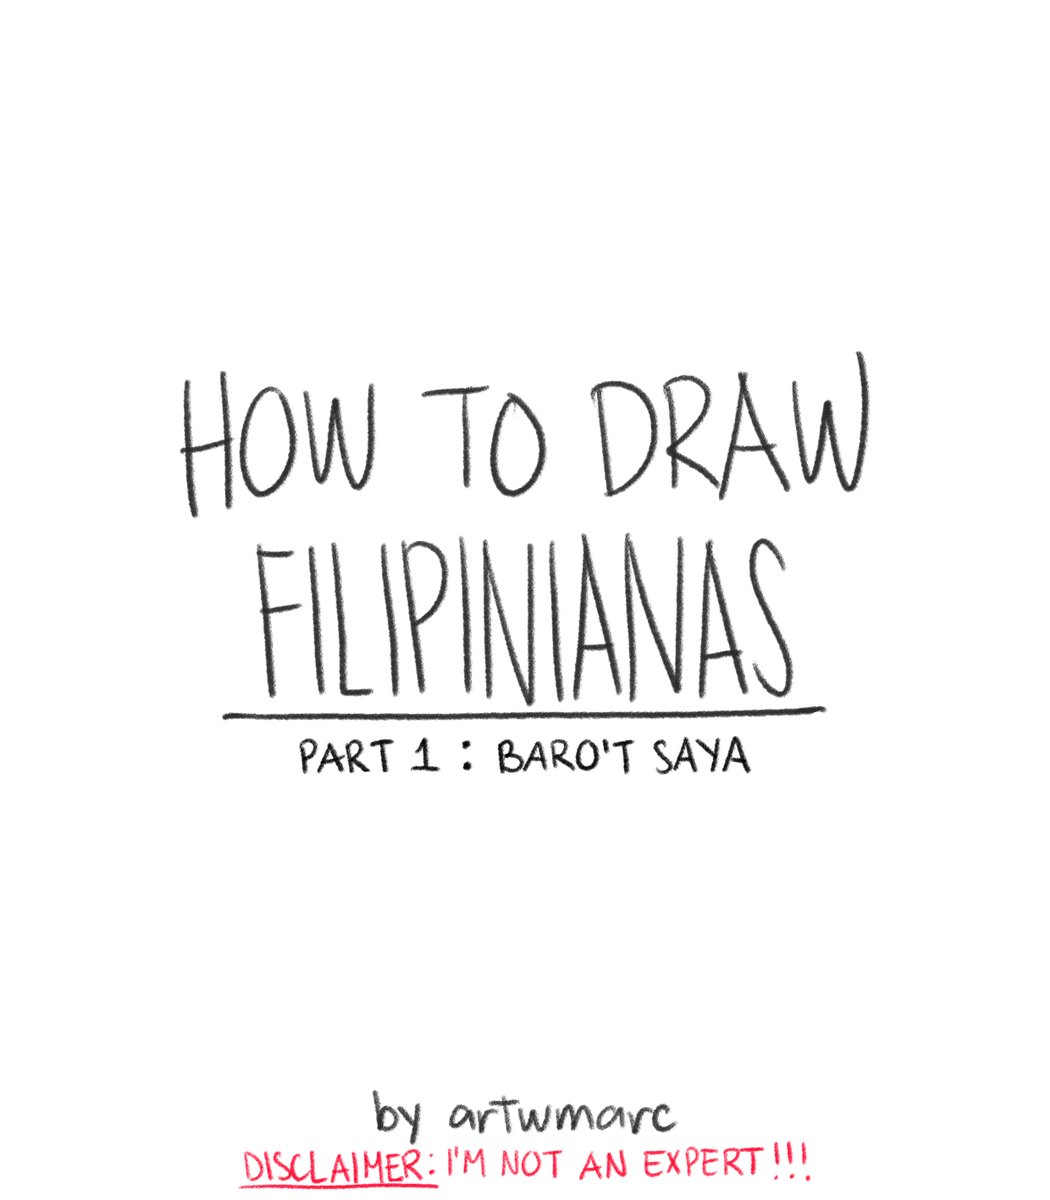 HOW TO DRAW FILIPINIANAS: PART 1 [THREAD](1/4)